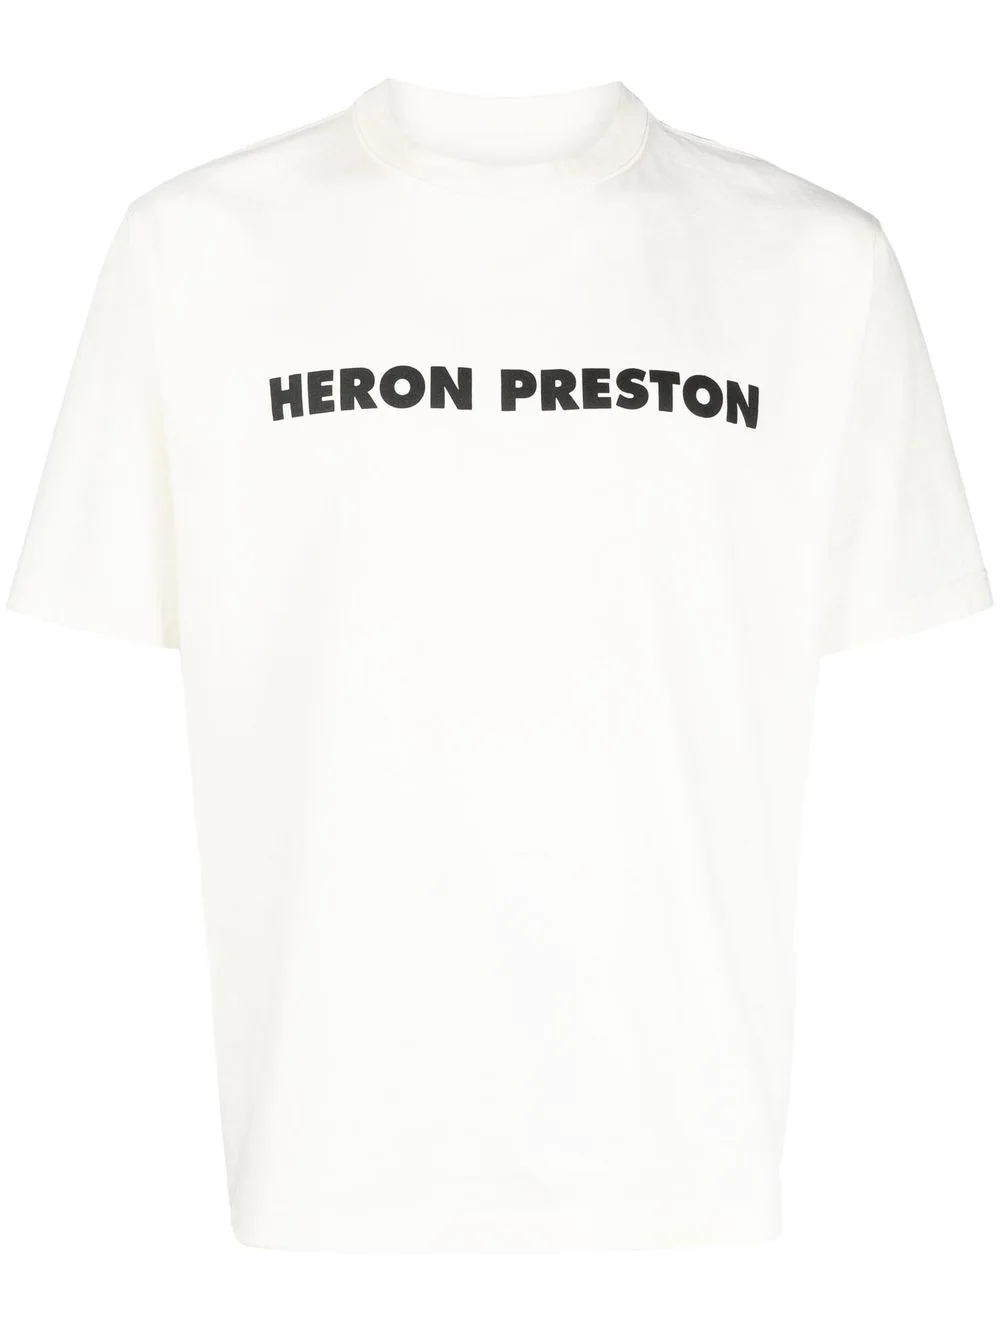 HERON PRESTON THIS IS NOT T-SHIRT